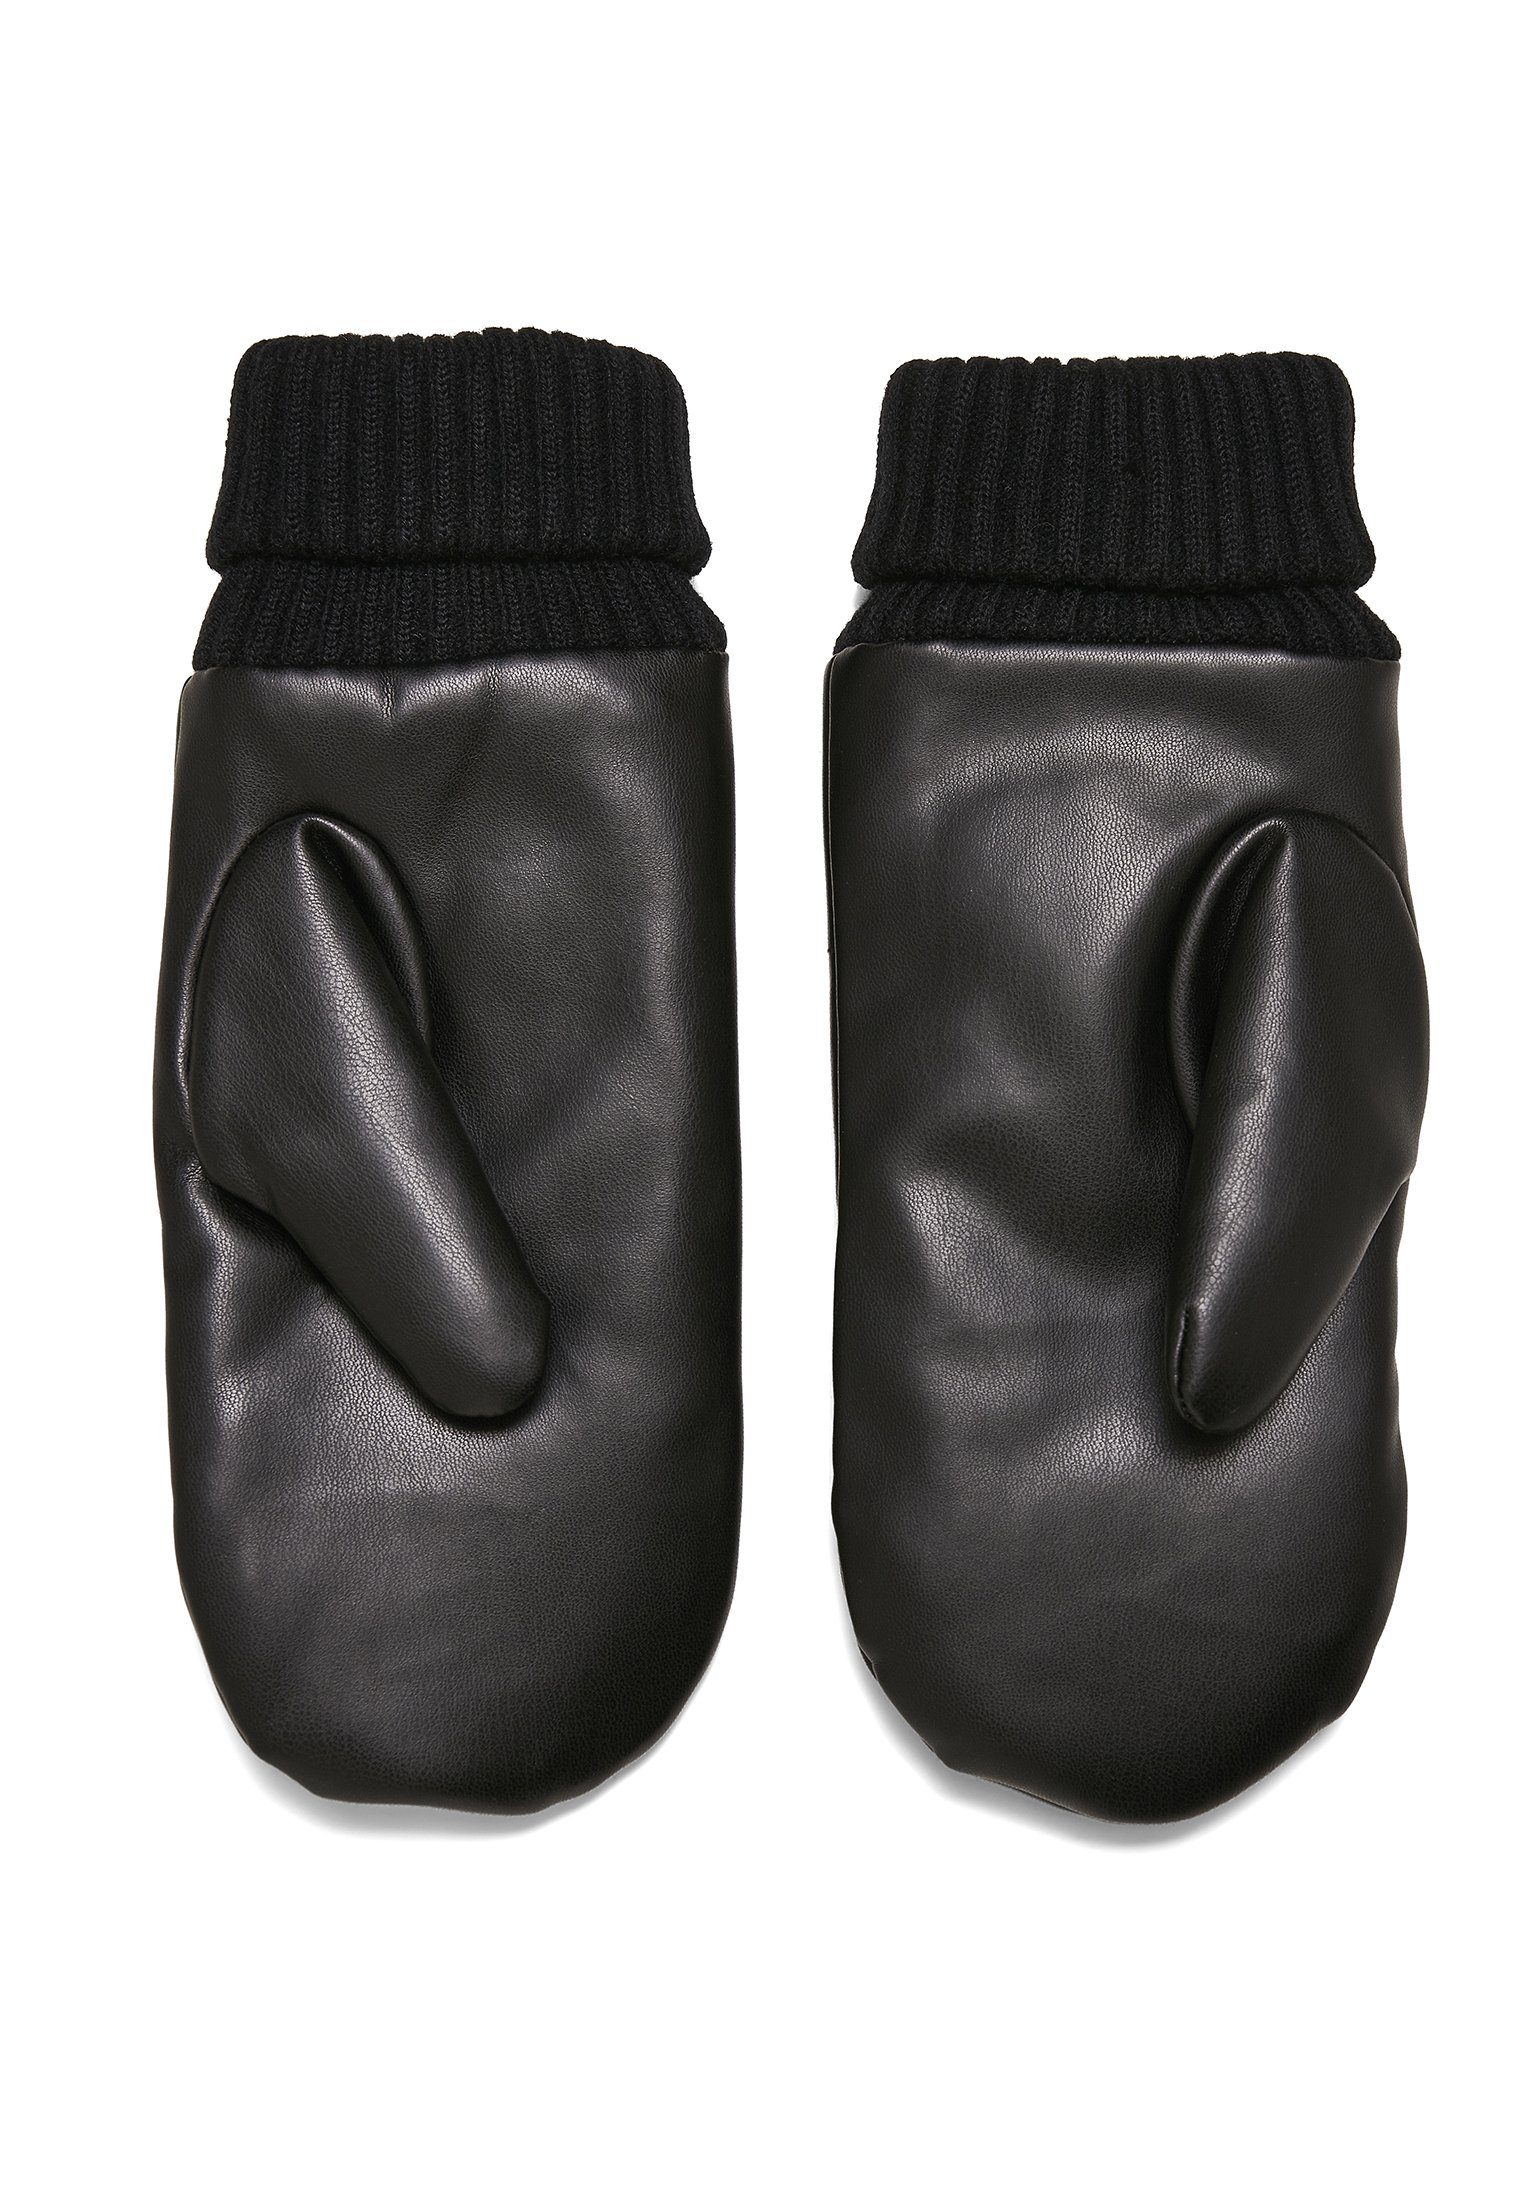 URBAN CLASSICS Puffer Leather Gloves Unisex Baumwollhandschuhe Imitation